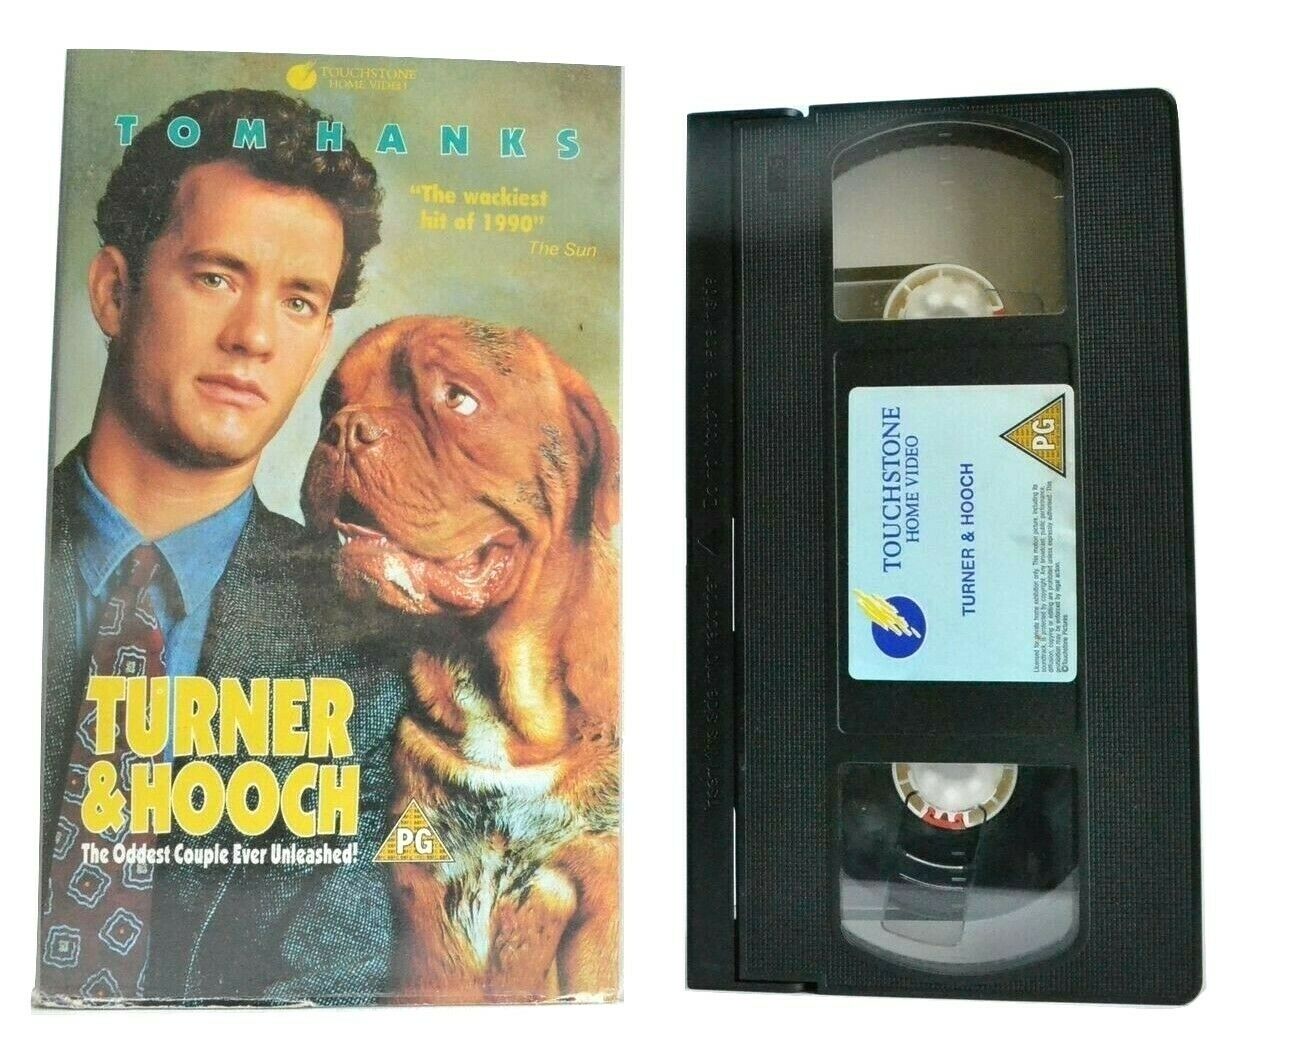 Turner & Hooch (1989): Buddy Cop Comedy - Beasley The Dog - Tom Hanks - Pal VHS-